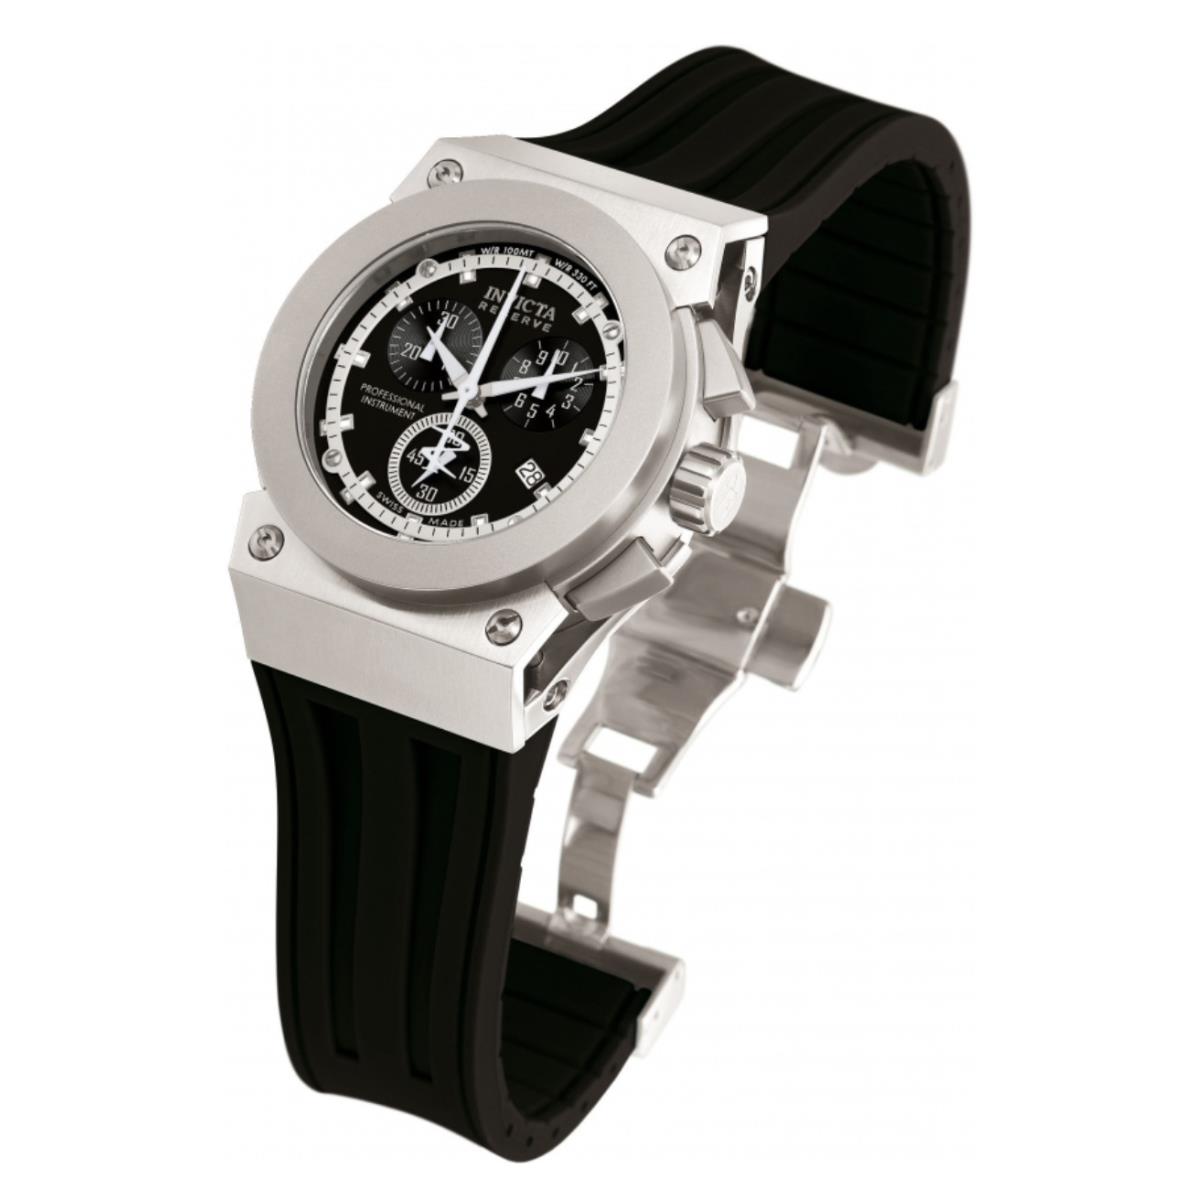 Invicta Akula Lady`s Watch Model 5565 Was - Dial: Silver, Band: Black, Bezel: Black